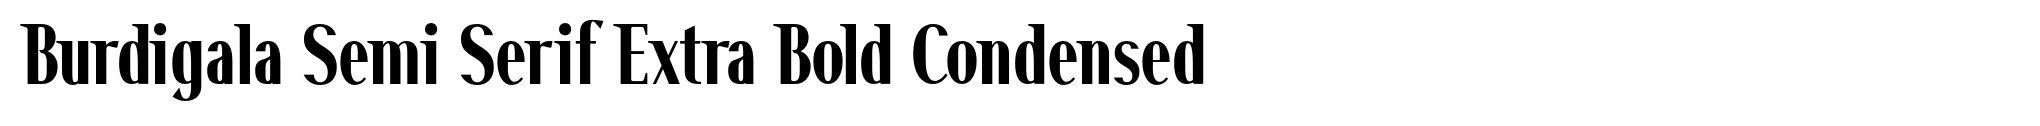 Burdigala Semi Serif Extra Bold Condensed image